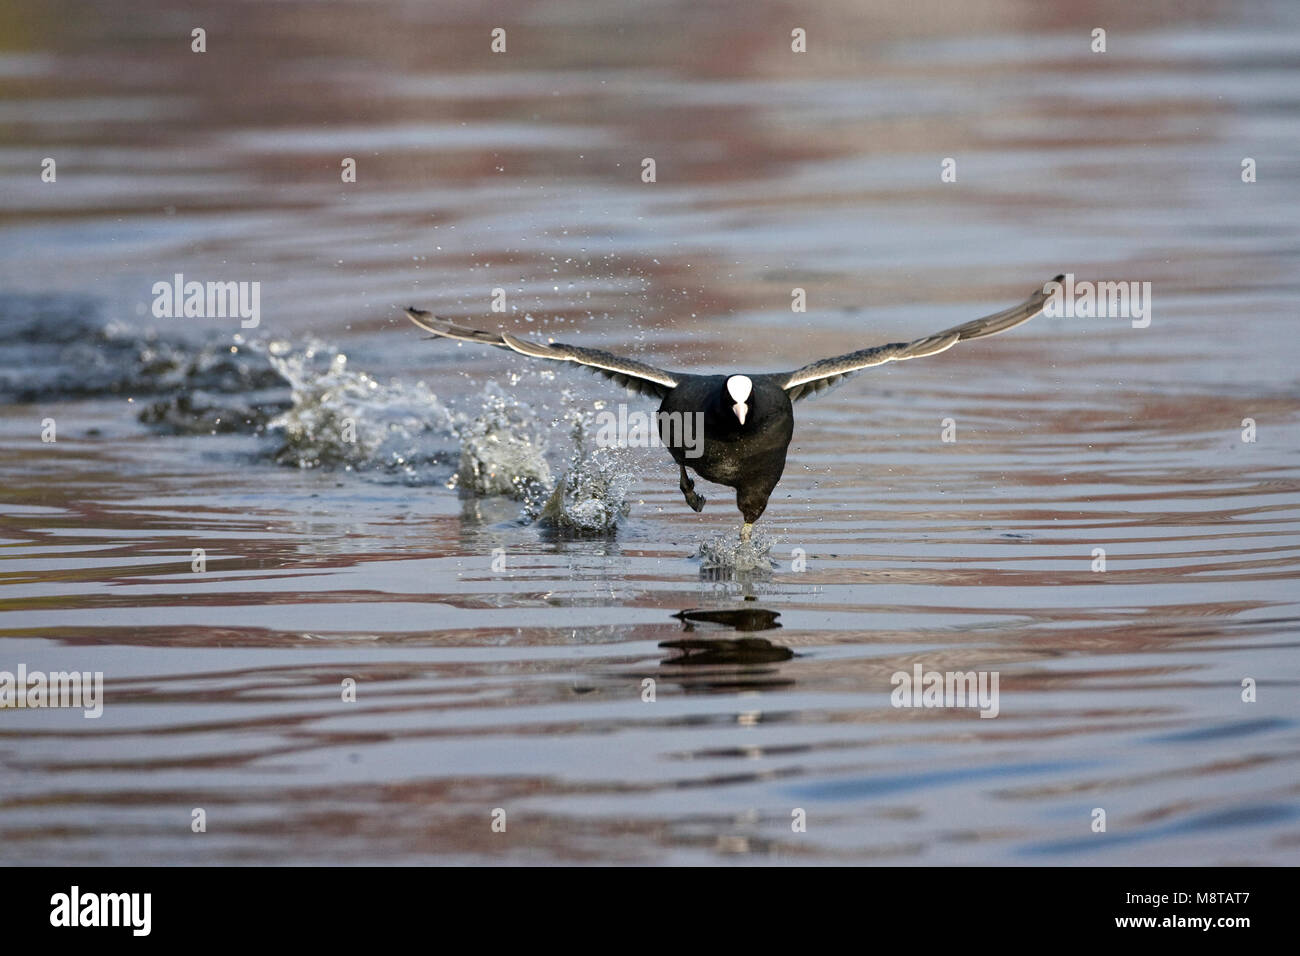 Meerkoet rennend über het water; Eurasian Coot laufen auf dem Wasser Stockfoto